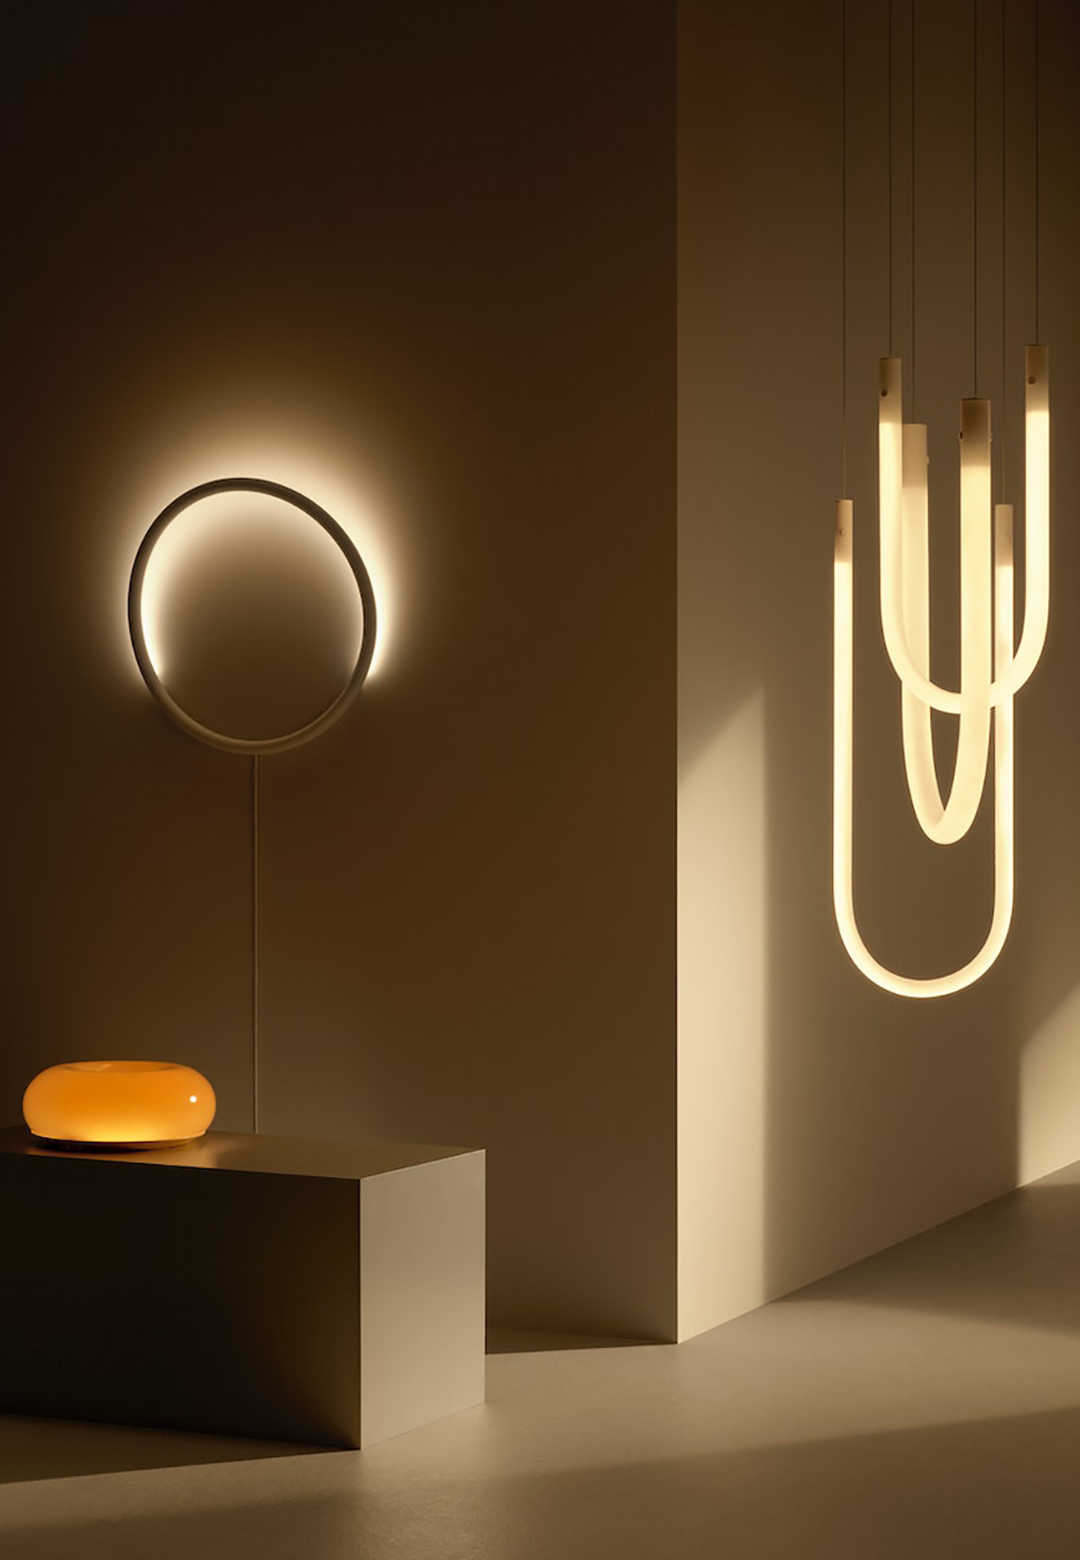 IKEA x Sabine Marcelis launch sculptural lamp and furniture collection ‘VARMBLIXT’